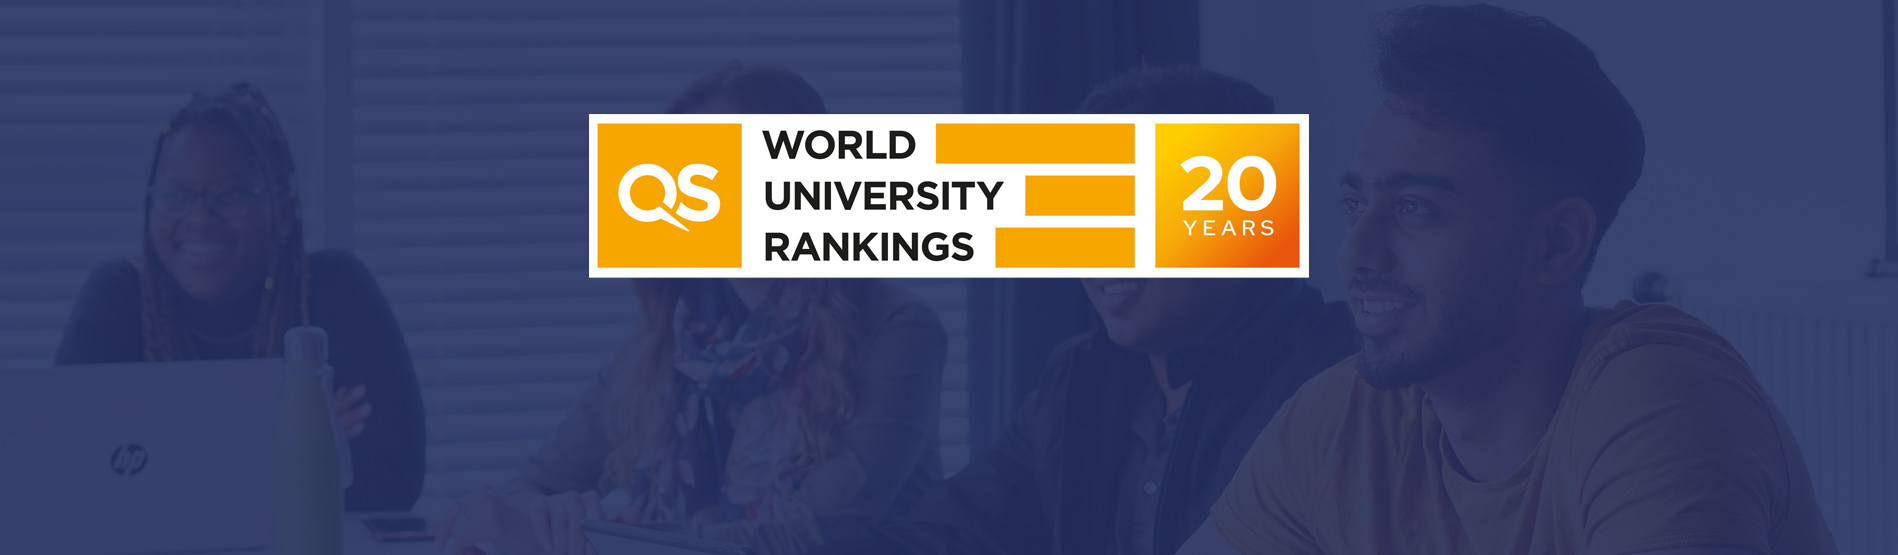 QS World rankings logo